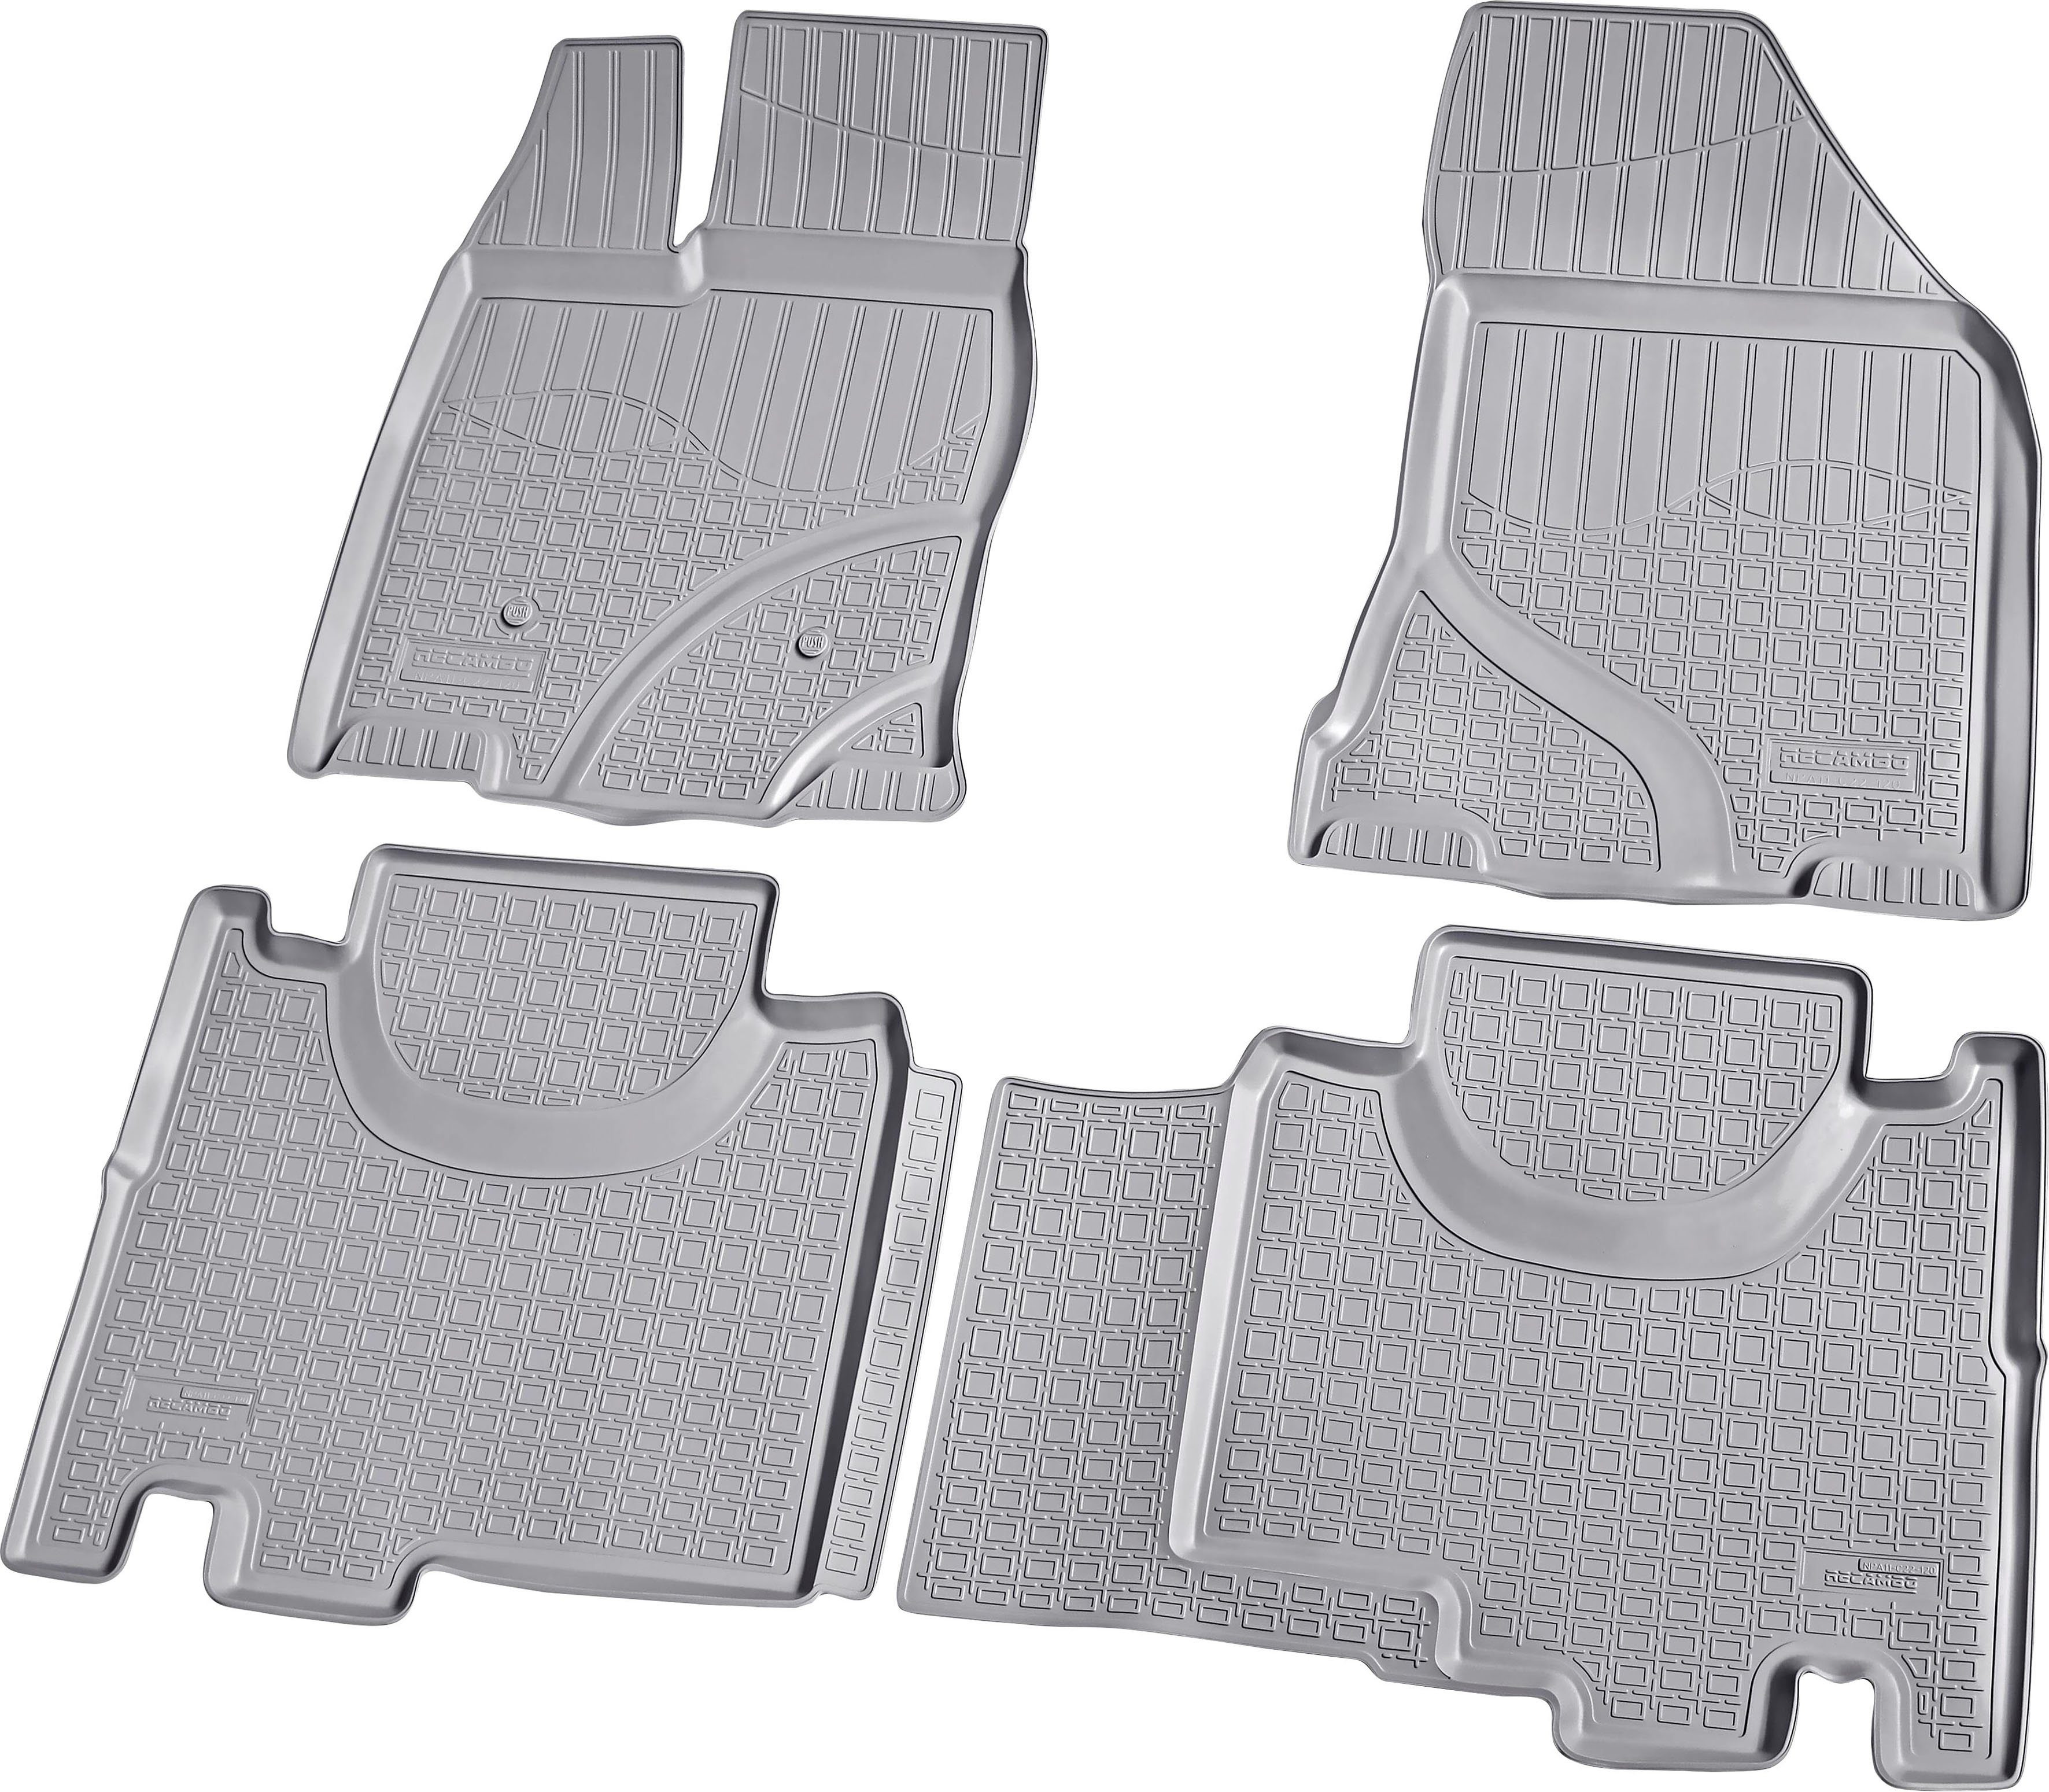 RECAMBO Passform-Fußmatten für I Passform (4 perfekte St), - Edge, Ford 2014, 2006 CustomComforts